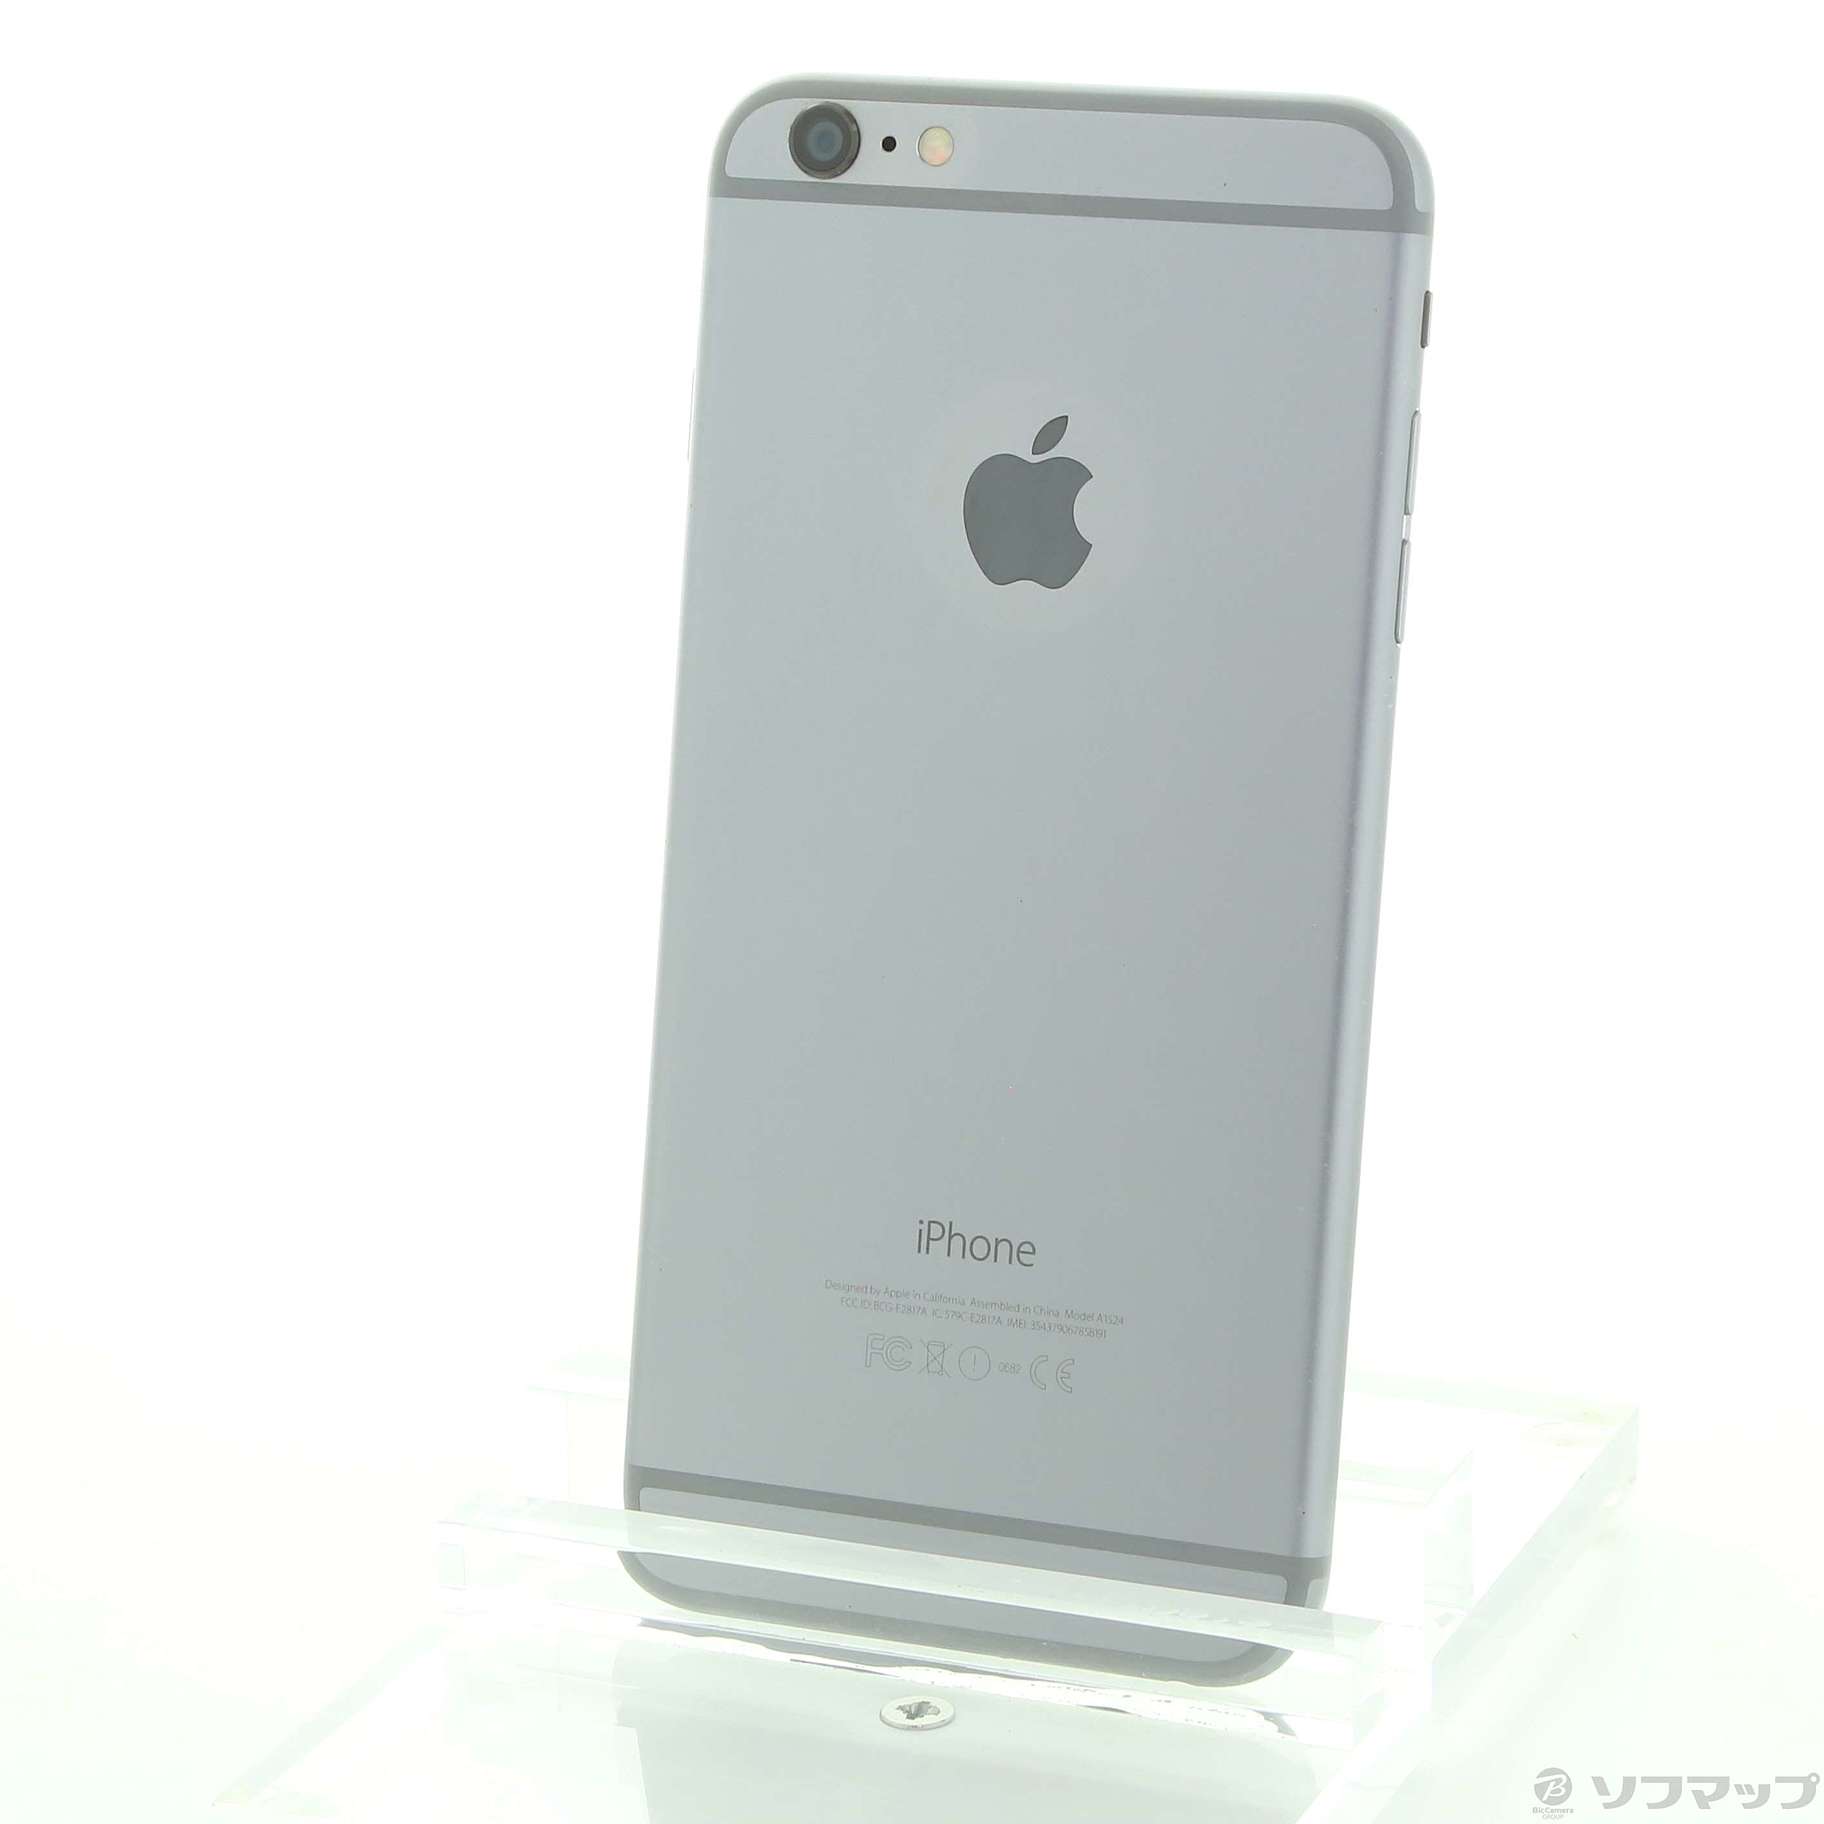 iPhone 6 Plus Gold 16 GB Softbank - スマートフォン本体